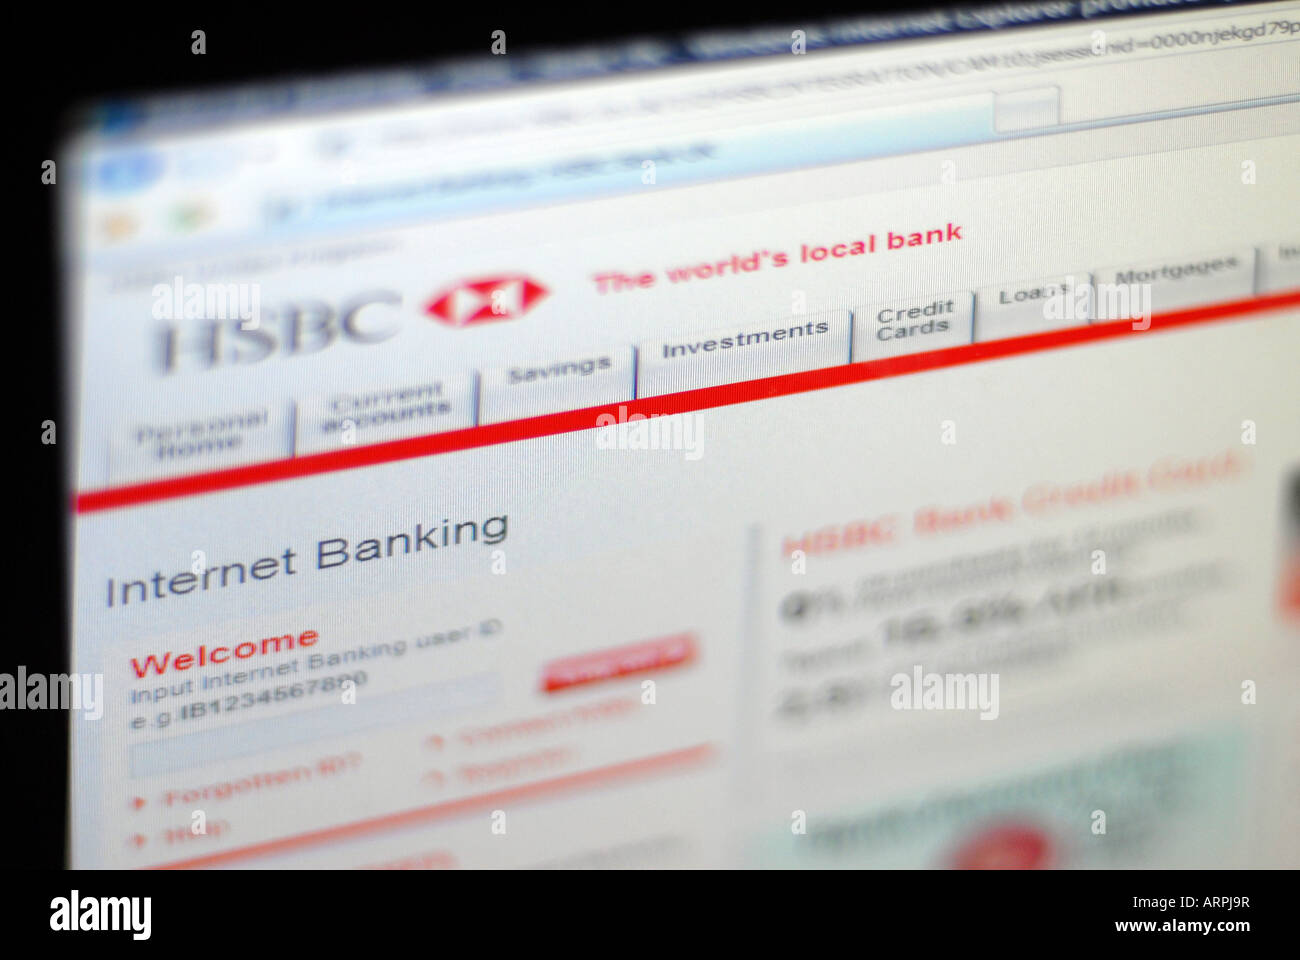 Hsbc online banking